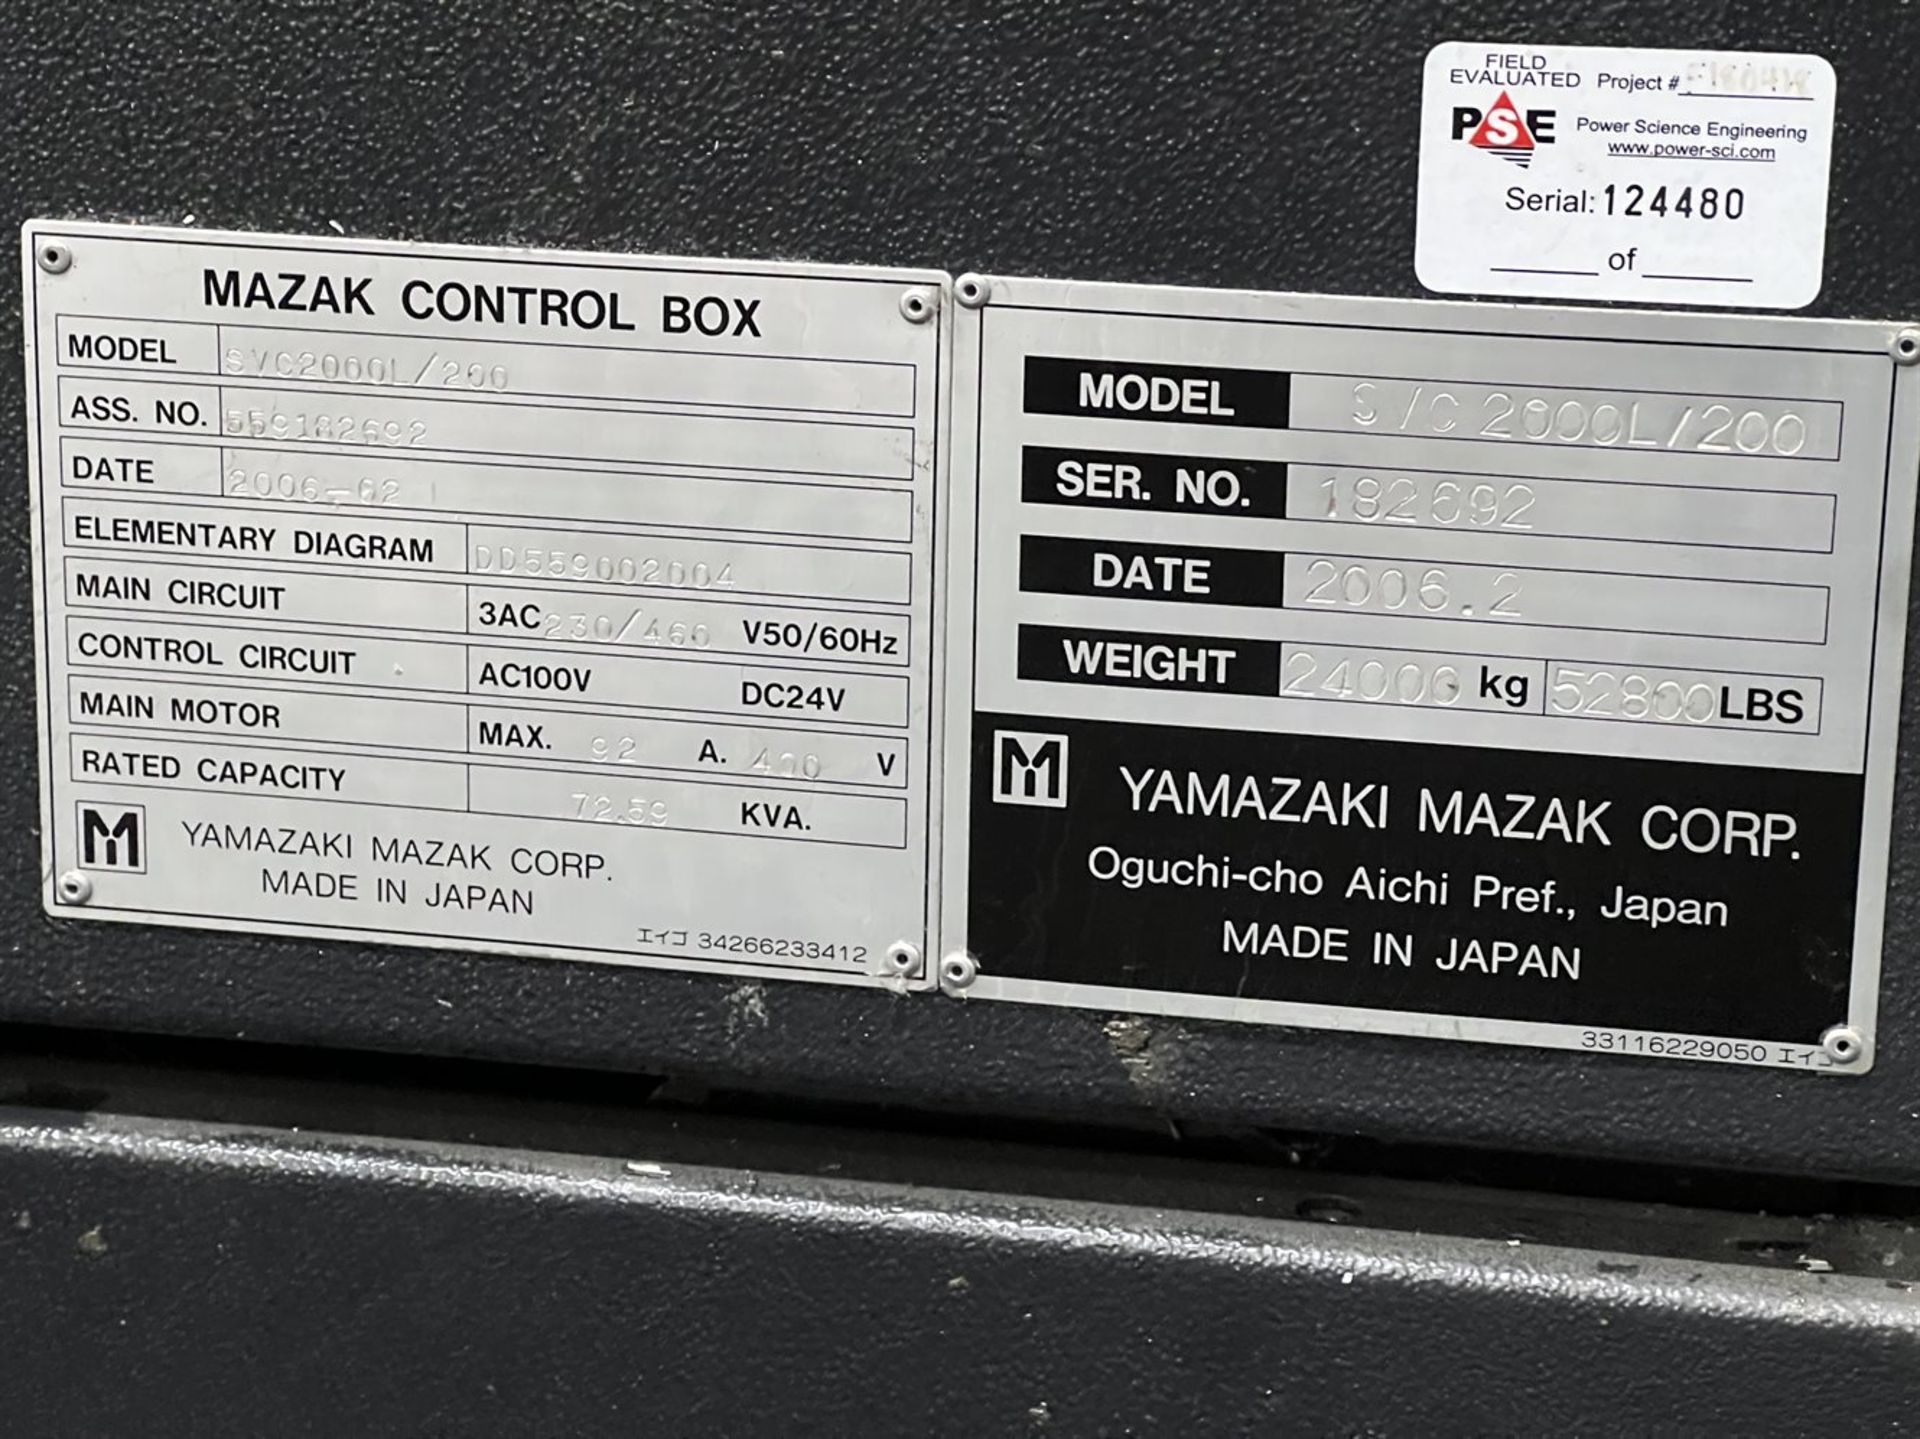 2006 MAZAK SVC 2000L/200 CNC Vertical Machining Center, s/n 182692, Mazatrol 640M Control, 212.6" - Image 18 of 23